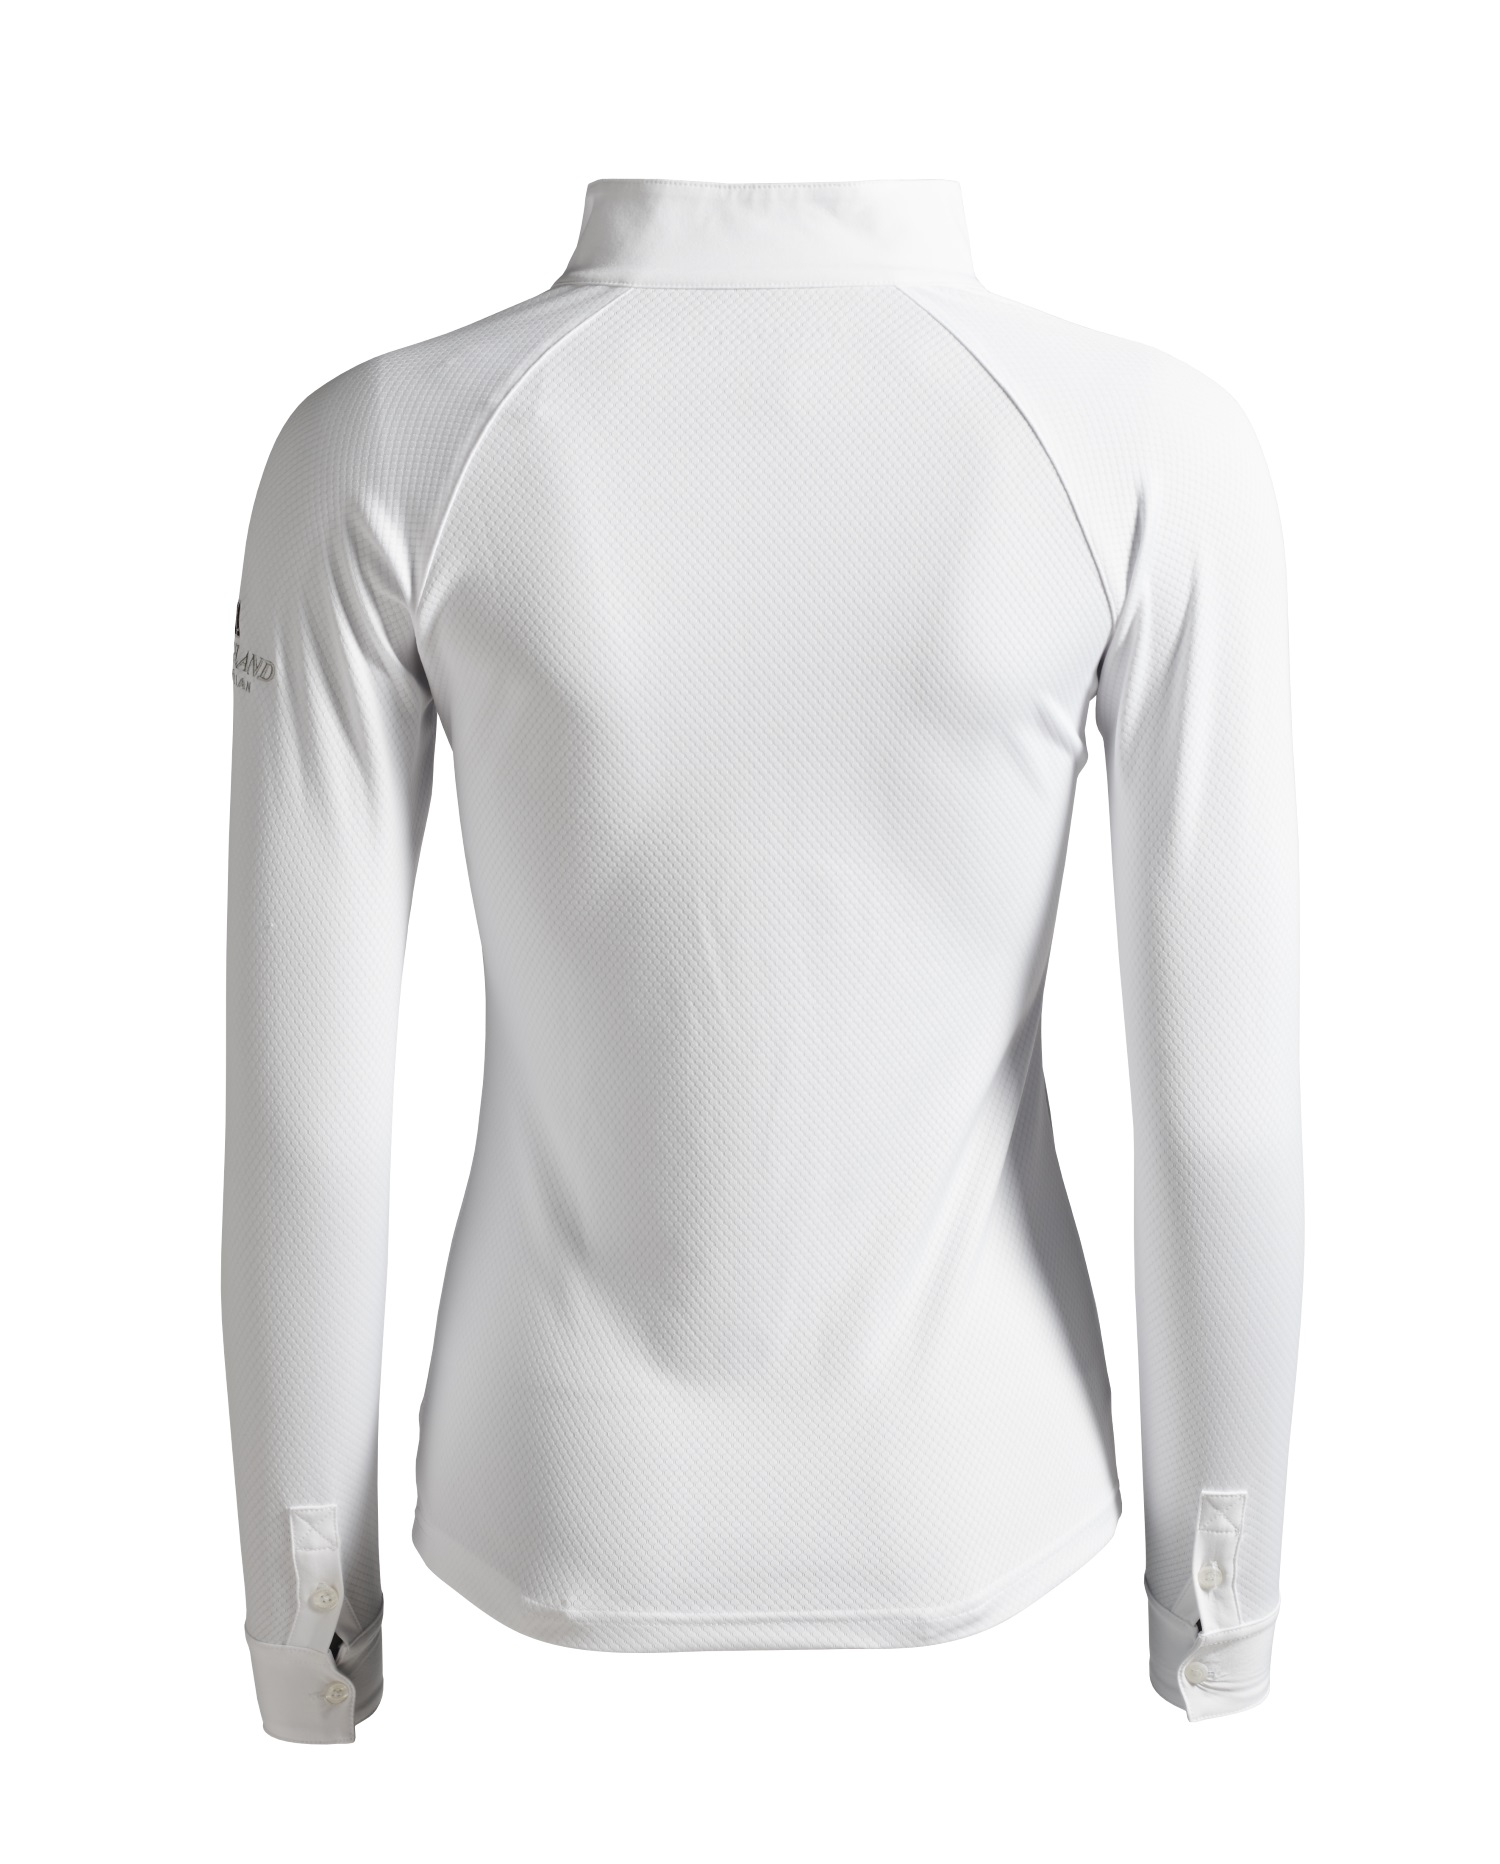 KINGSLAND Classic Damen Langarm Turniershirt - white - S - 2